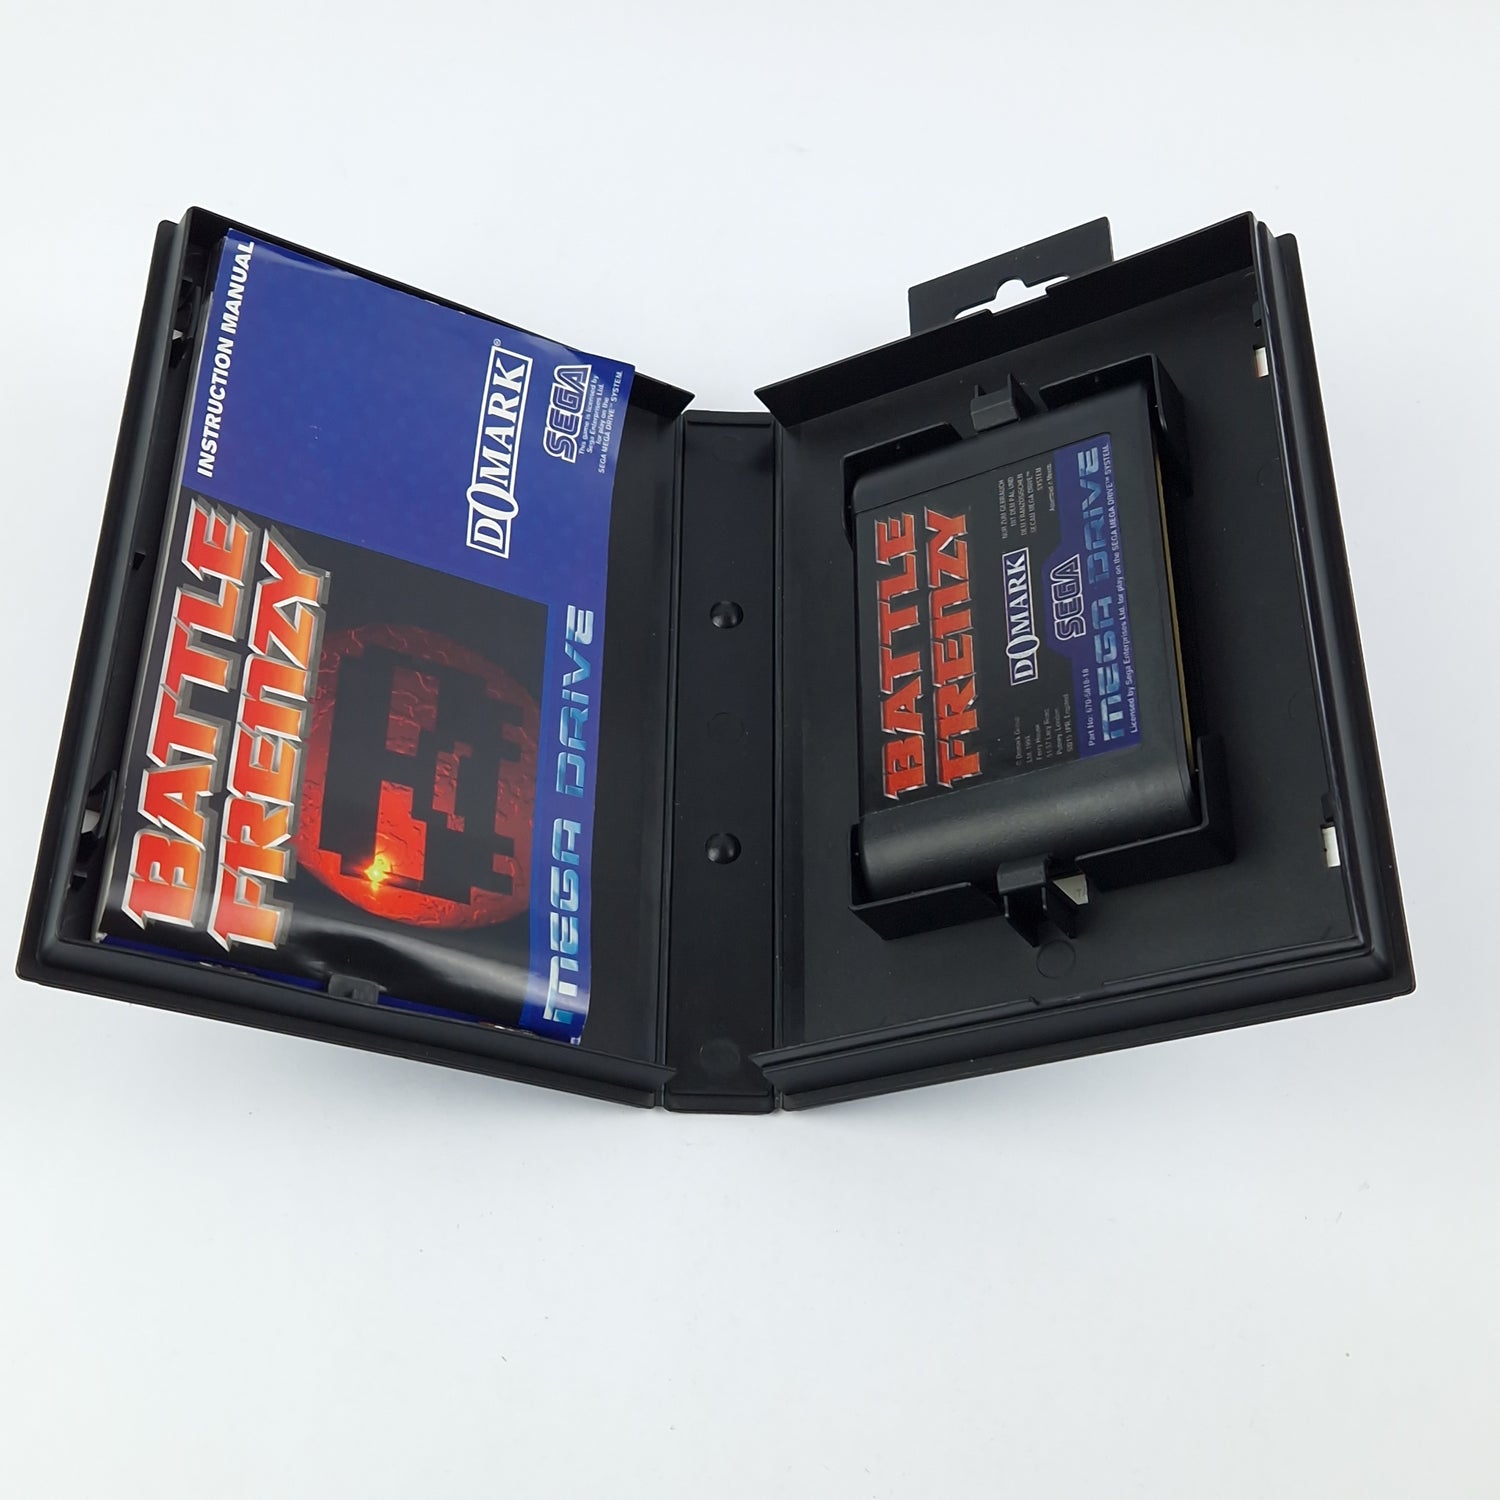 Sega Mega Drive Game: Battle Frenzy - Module Instructions OVP cib / PAL MD